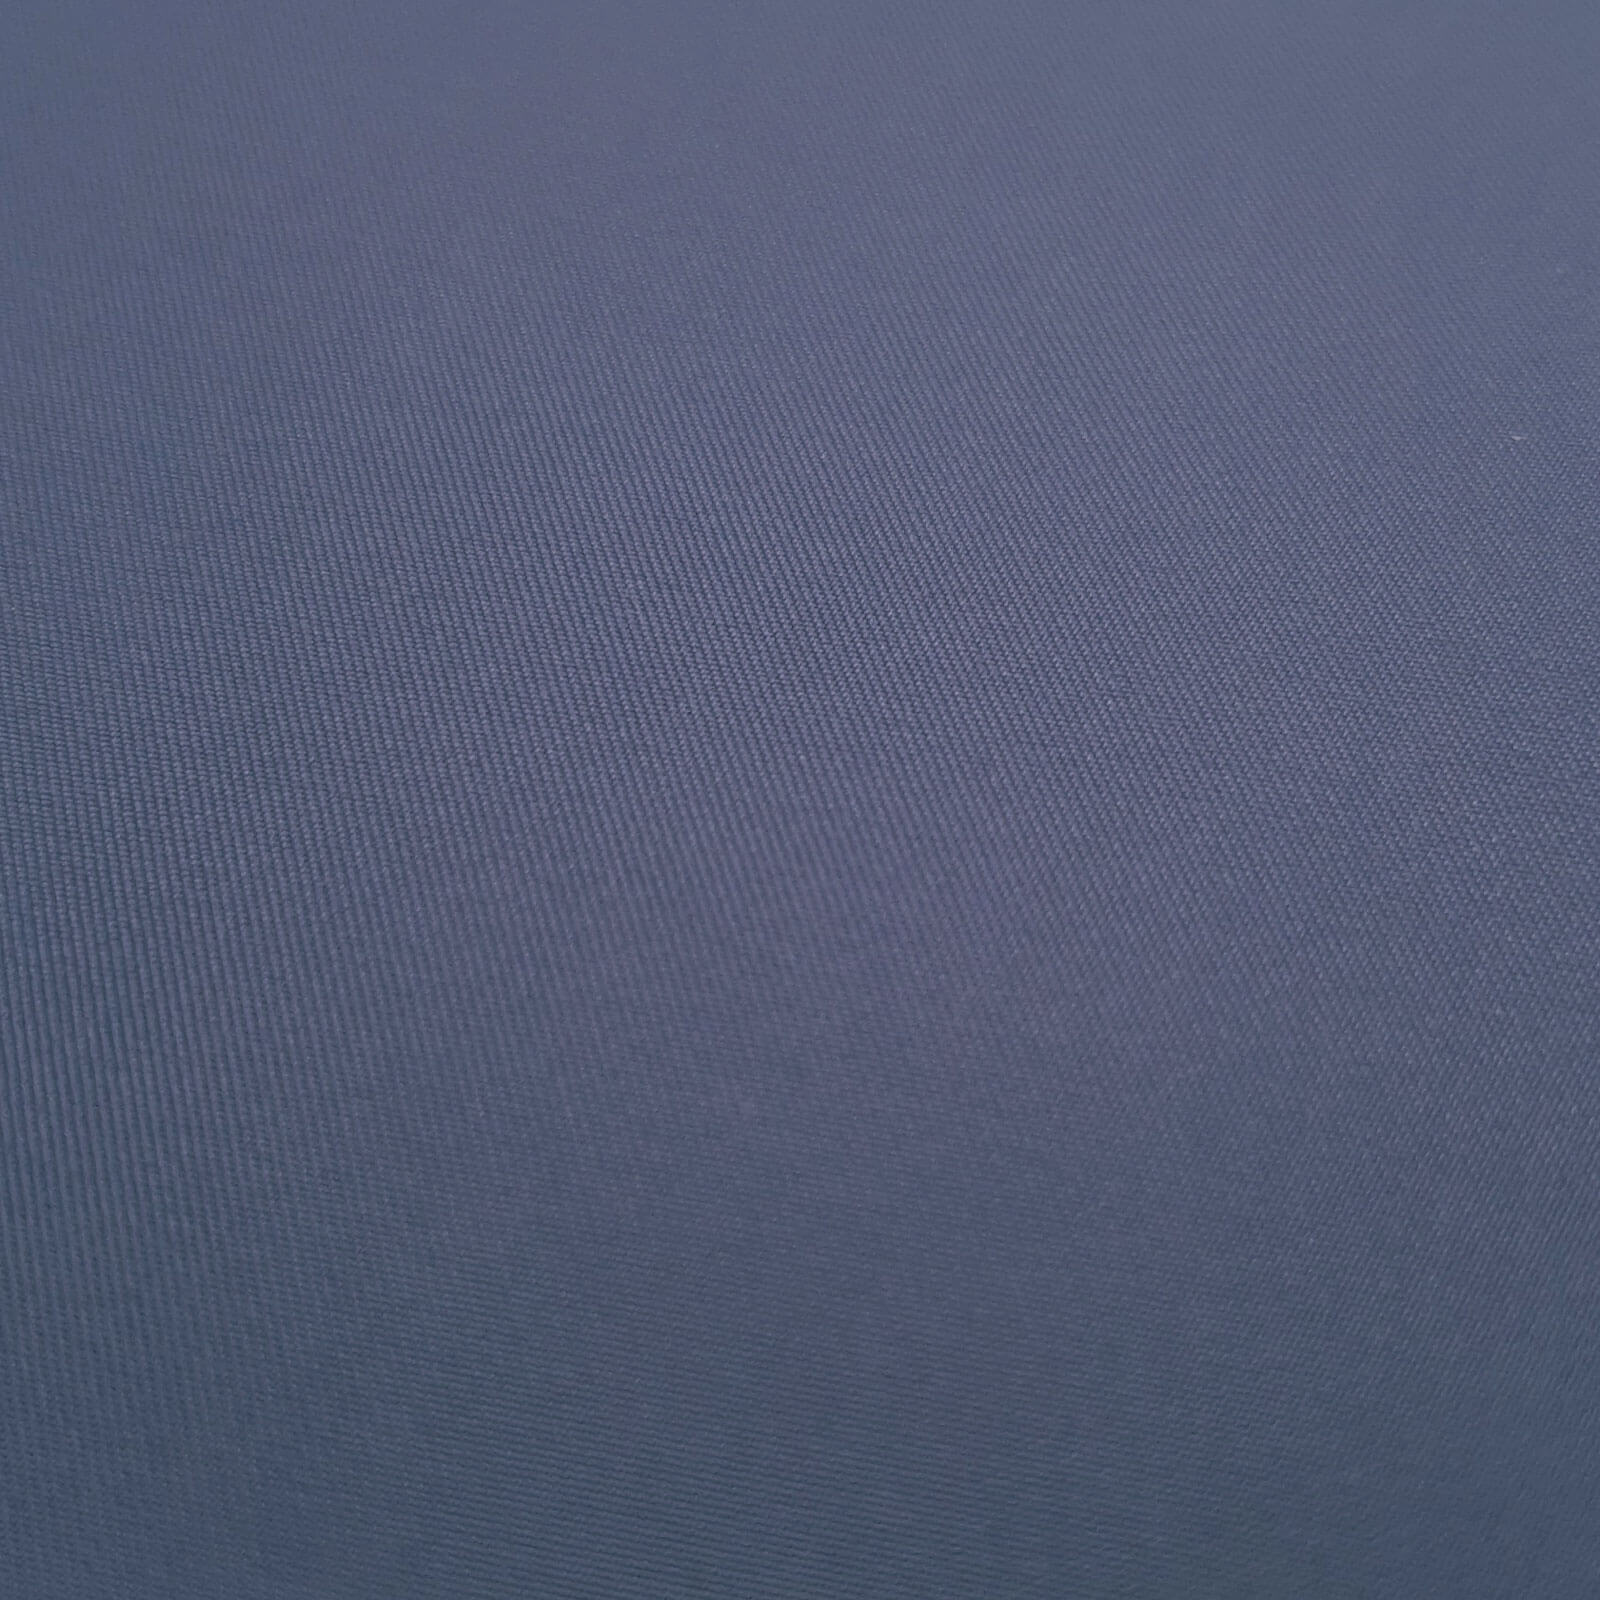 Laurena - Buitenstof laminaat met klimaatmembraan - Medium blauw